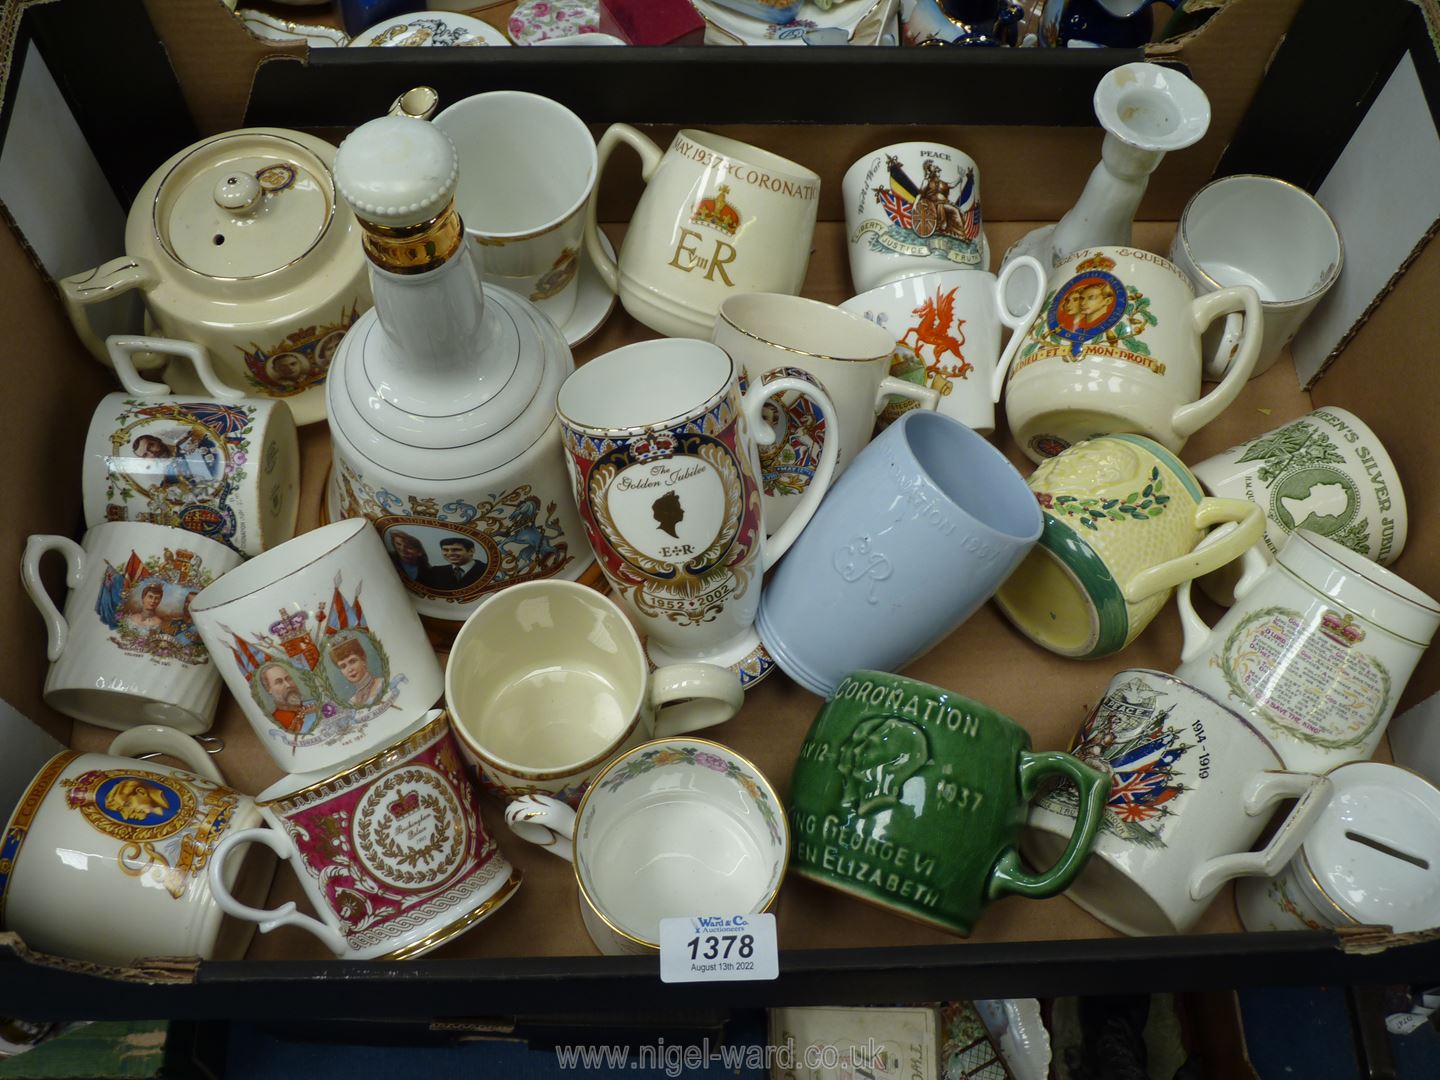 A quantity of commemorative china including a Mason's silver jubilee mug, WWI mug, Meakin mugs,